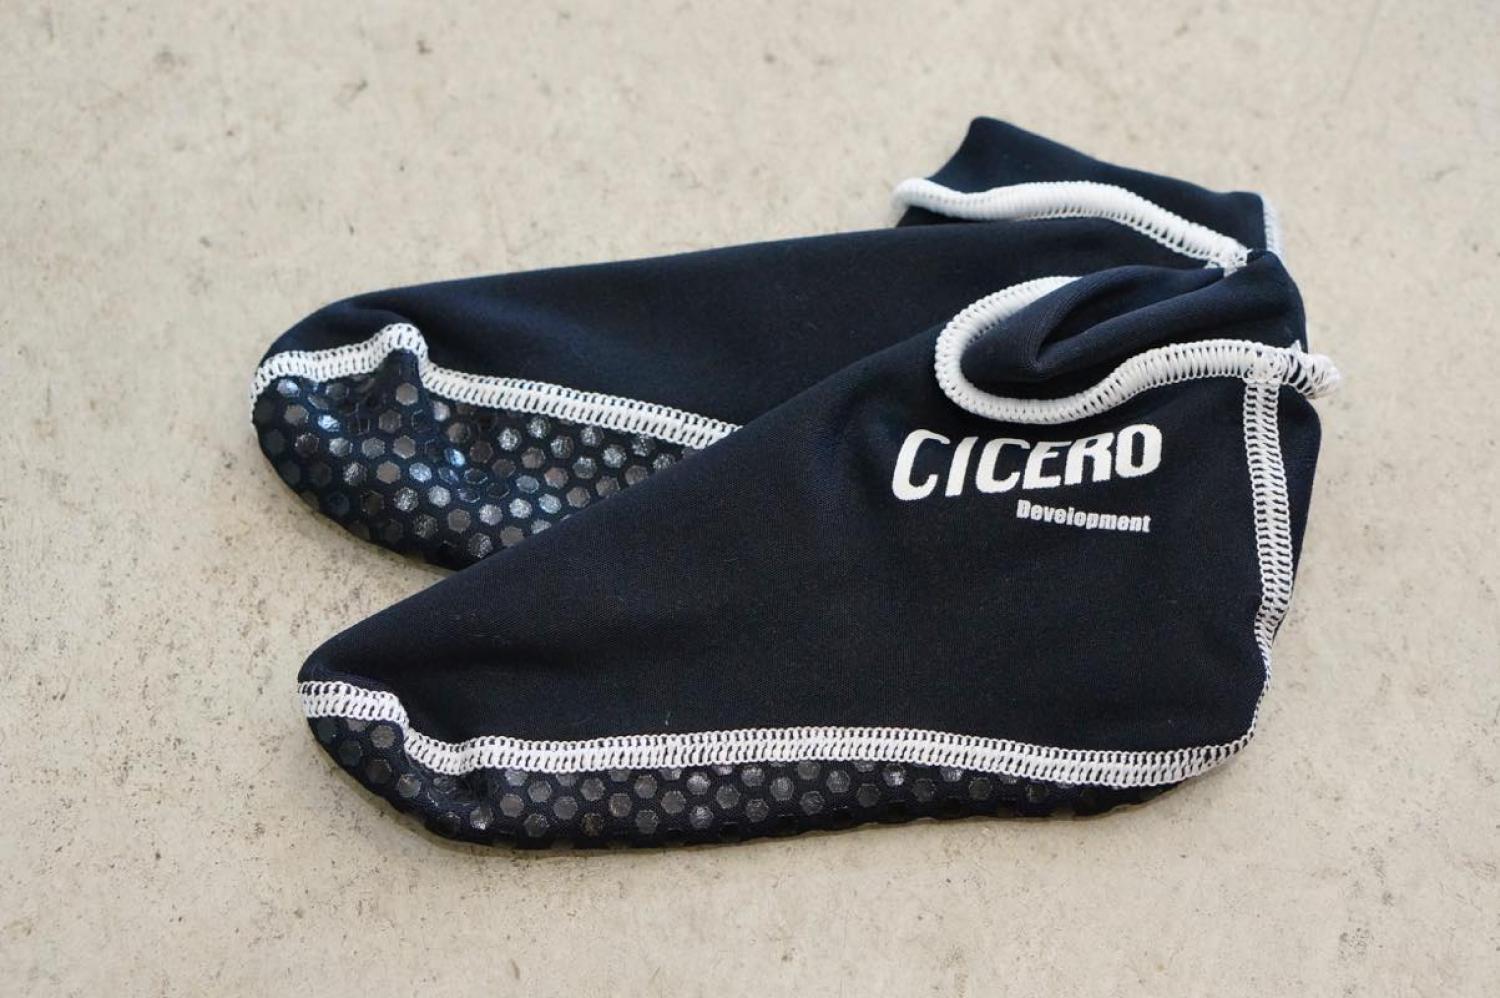 cicero fin socks with heel